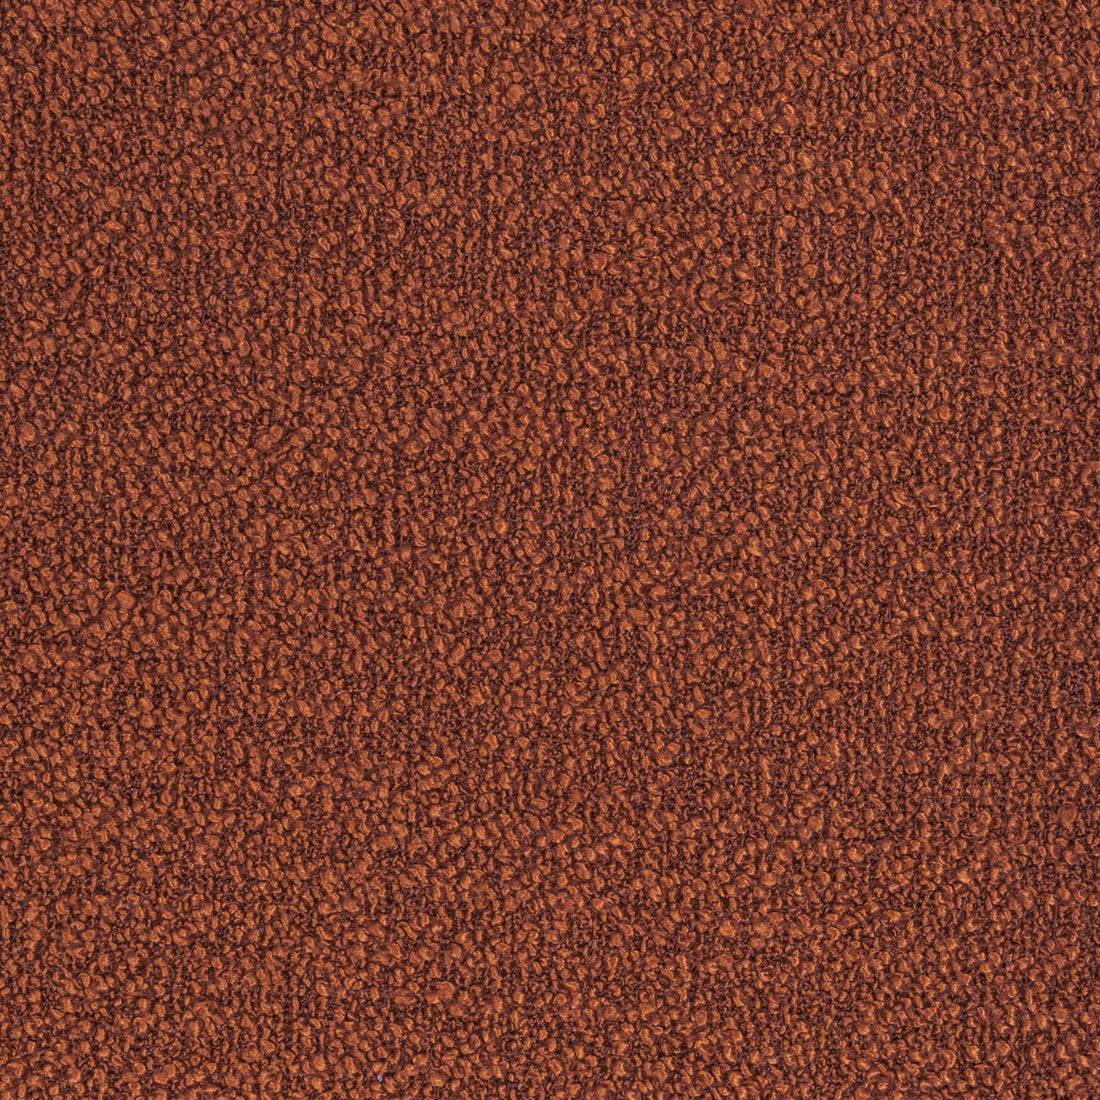 Kravet Smart fabric in 36857-24 color - pattern 36857.24.0 - by Kravet Smart in the Performance Kravetarmor collection